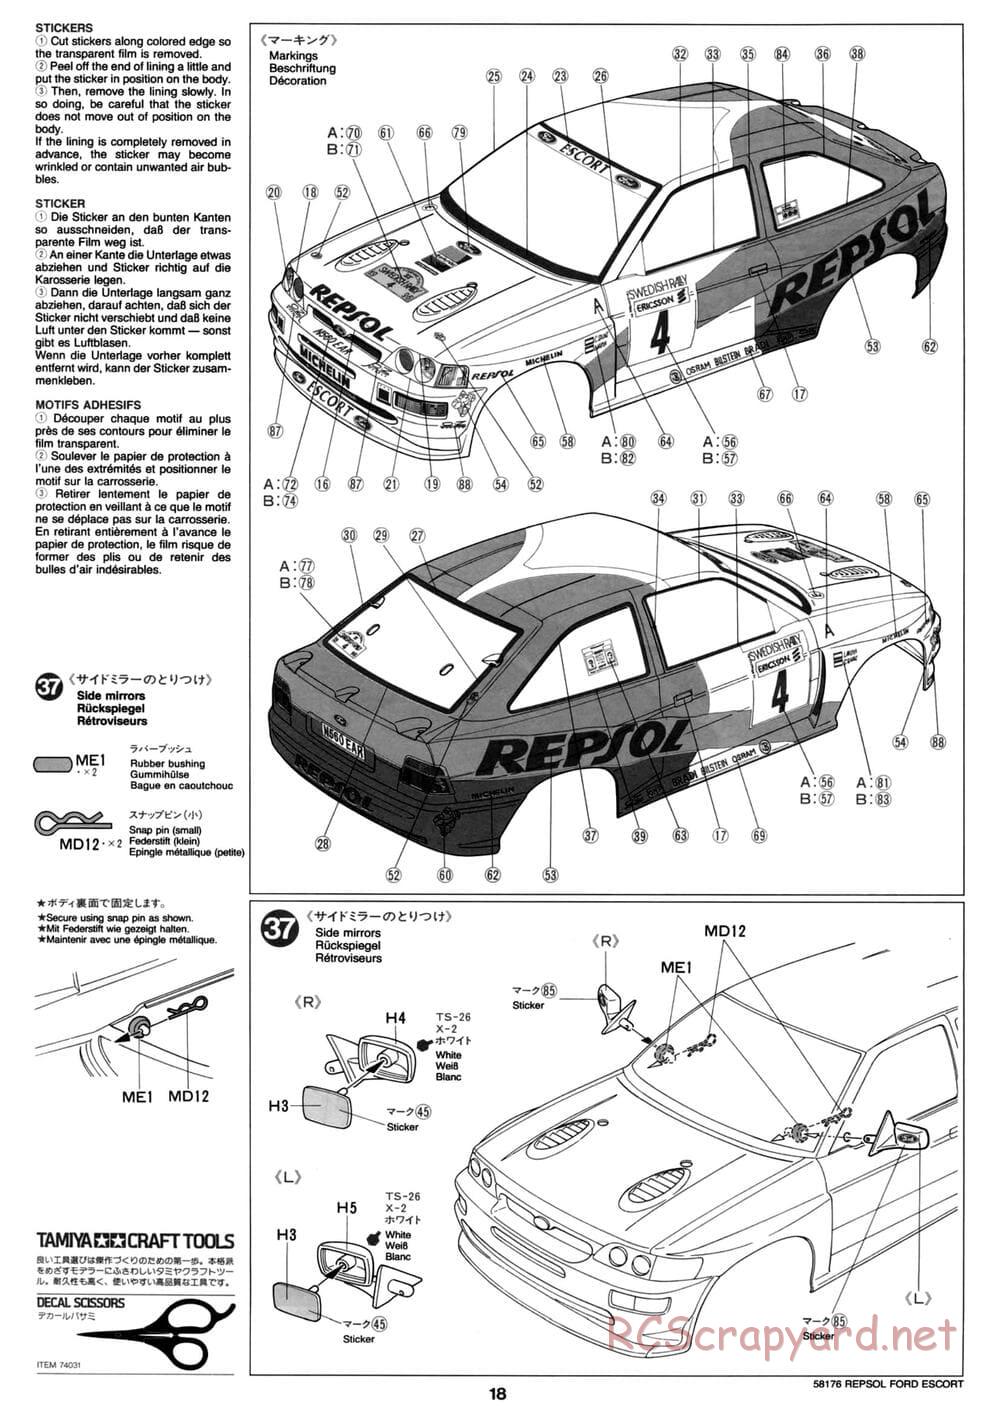 Tamiya - Repsol Ford Escort RS Cosworth - TA-02 Chassis - Manual - Page 18